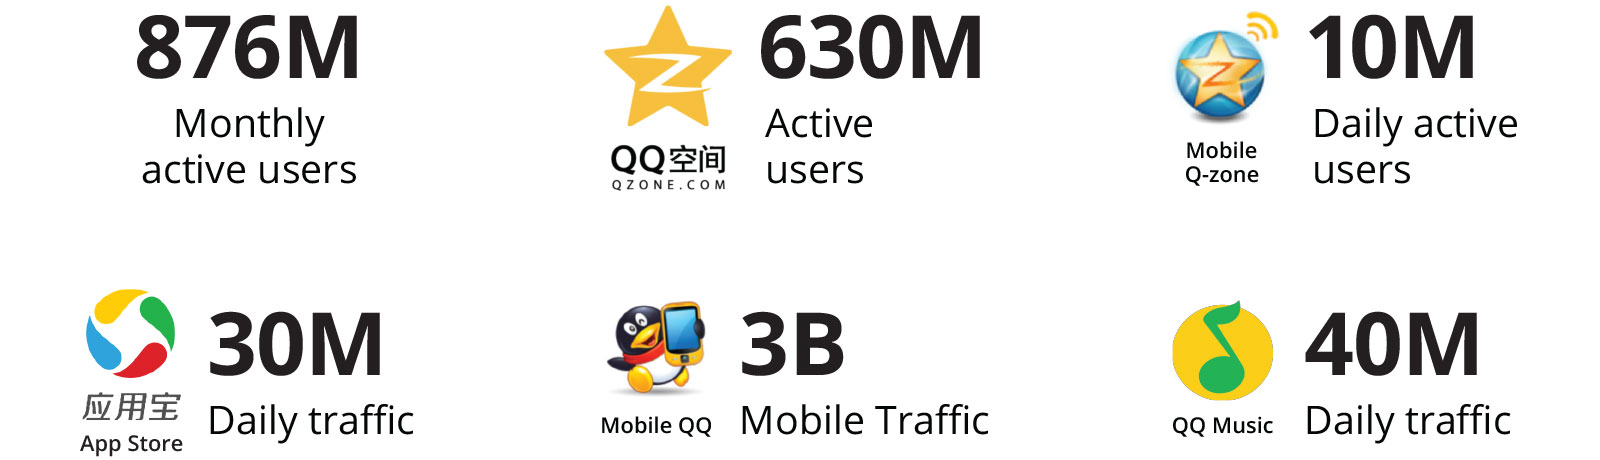 QQ network